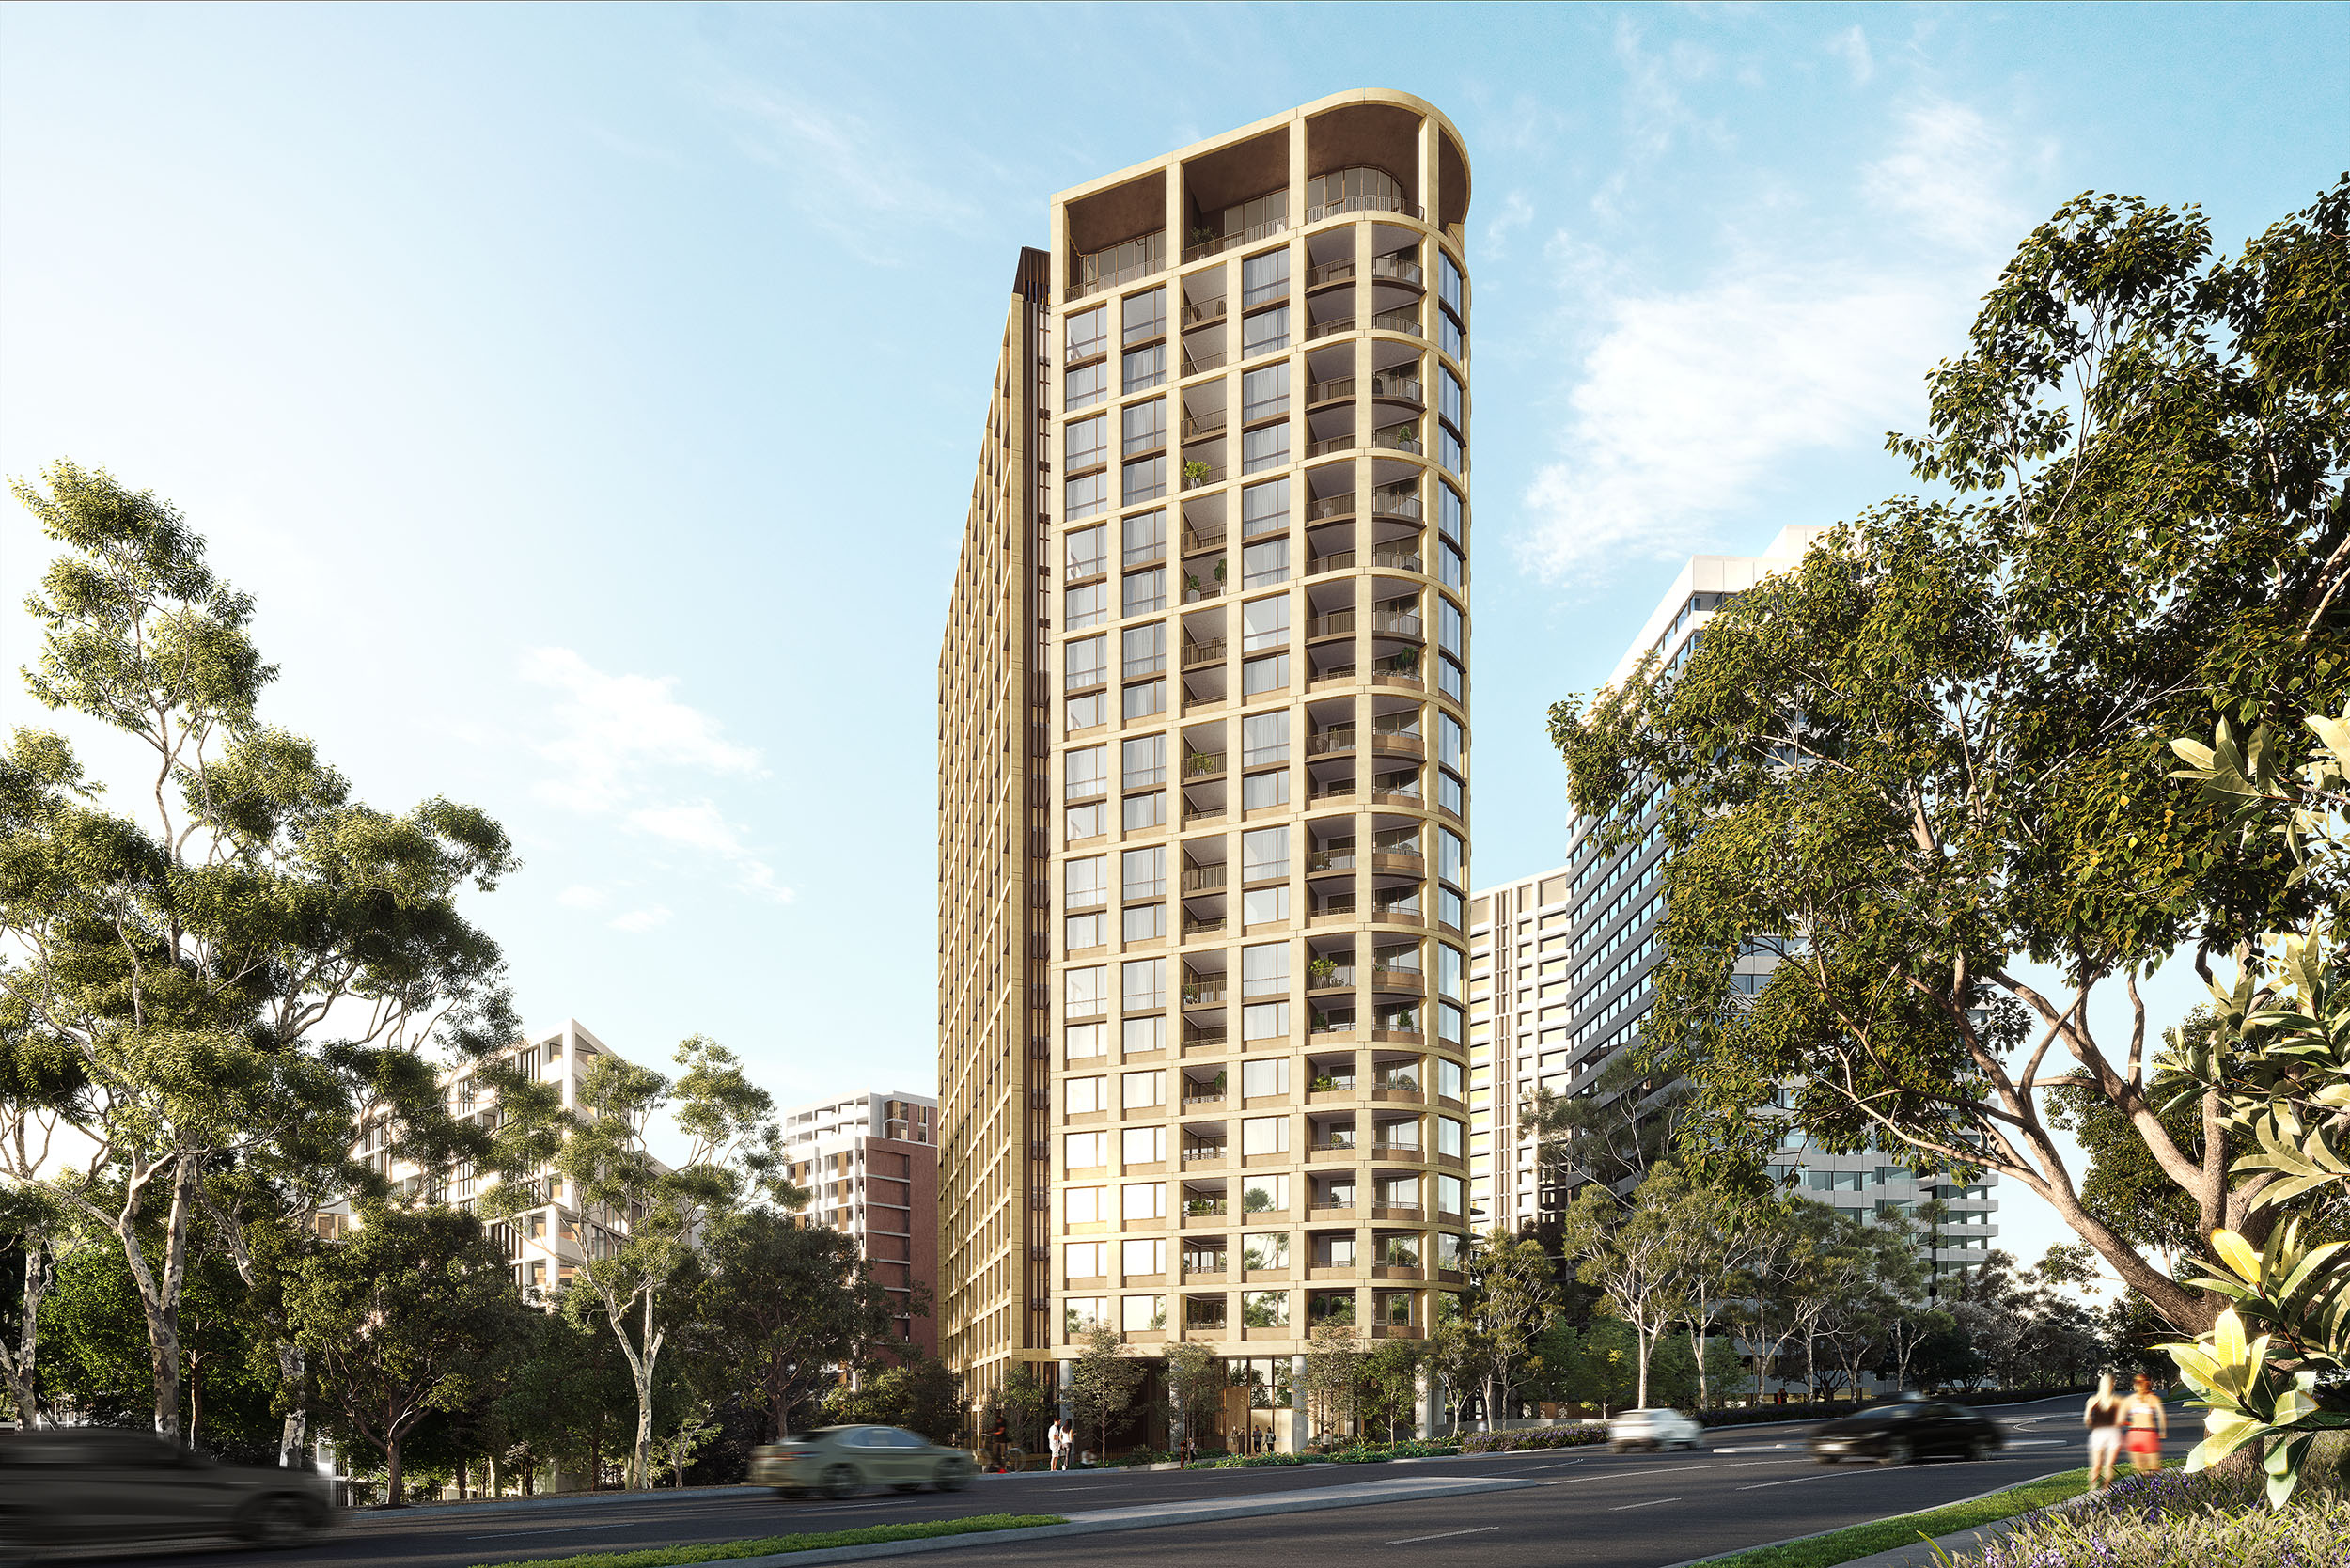 Frasers Property Australia secures major funding partner at Midtown